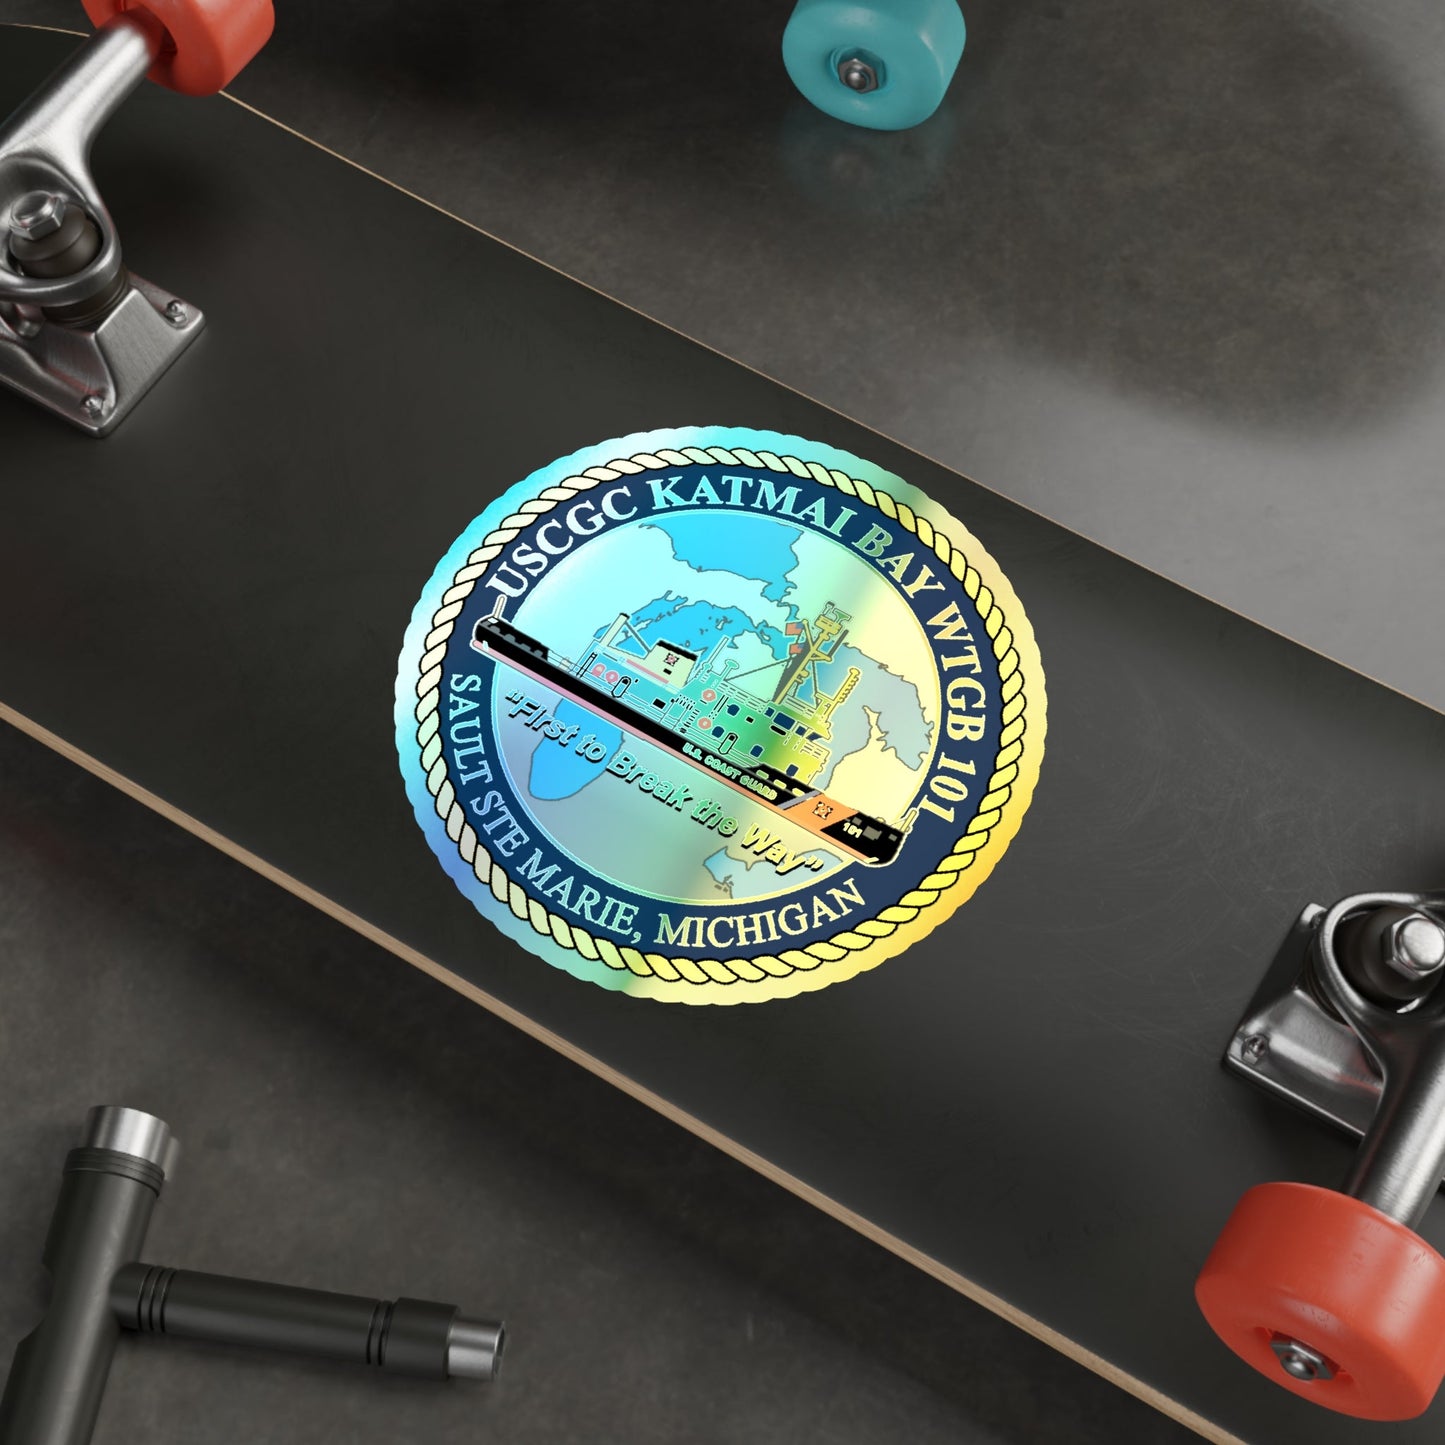 USCG Katmai Bay WTGB 101 (U.S. Coast Guard) Holographic STICKER Die-Cut Vinyl Decal-The Sticker Space